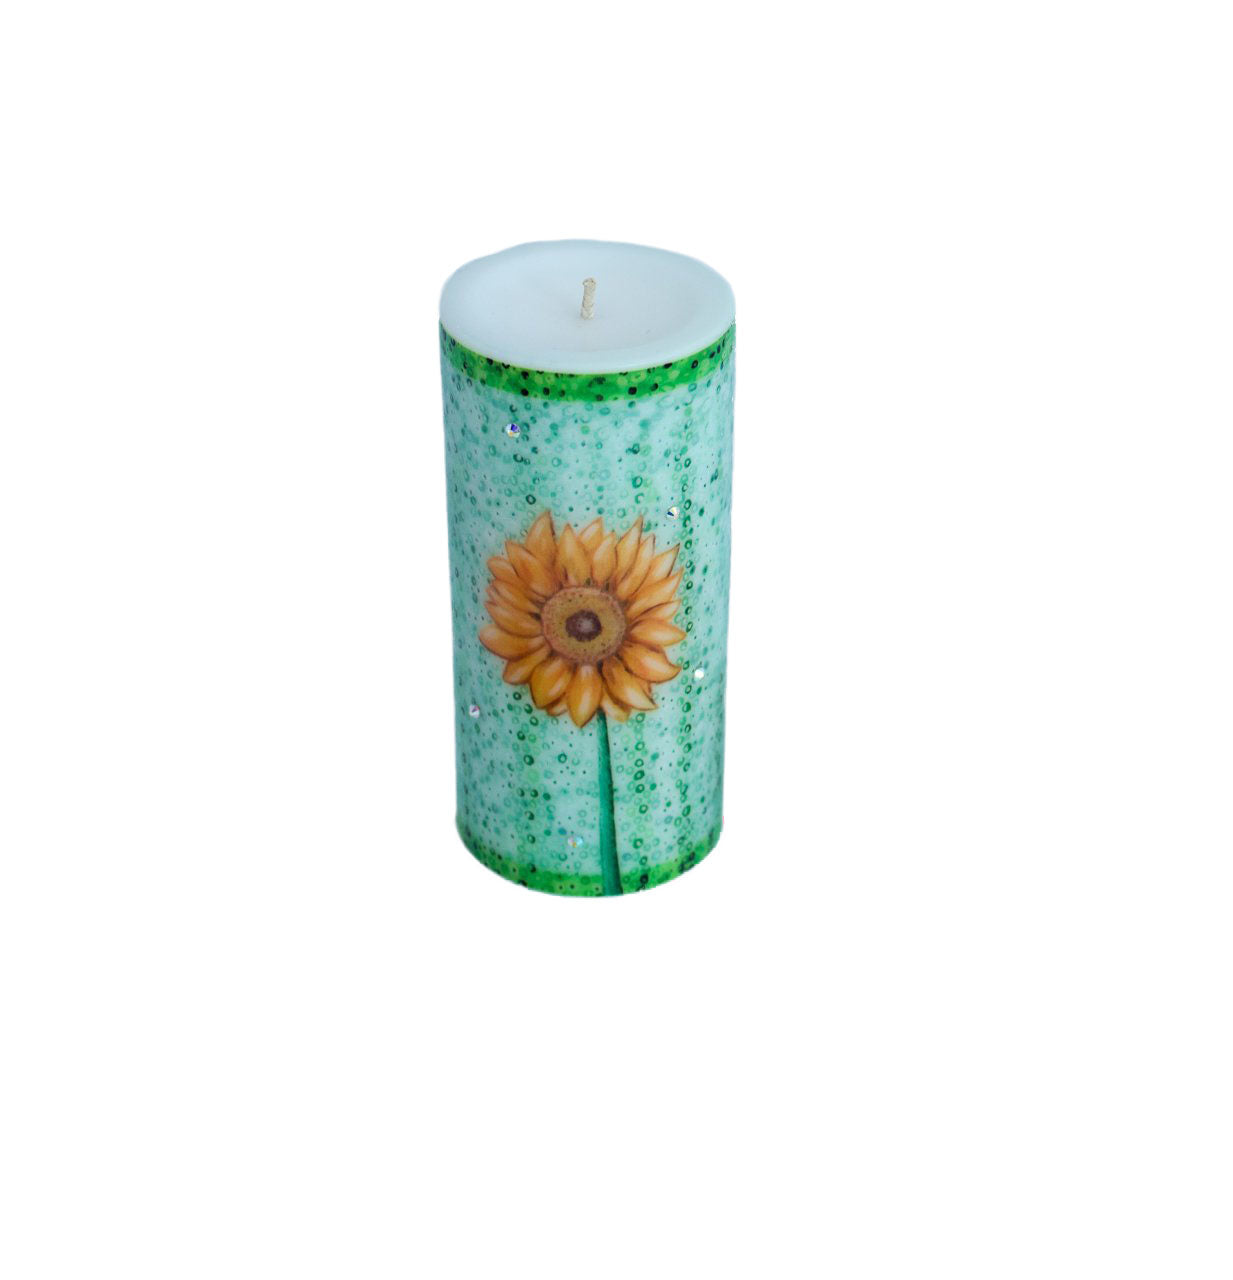 Swarovski Crystals Pillar Candle Sunflower STRENGTH Unscented